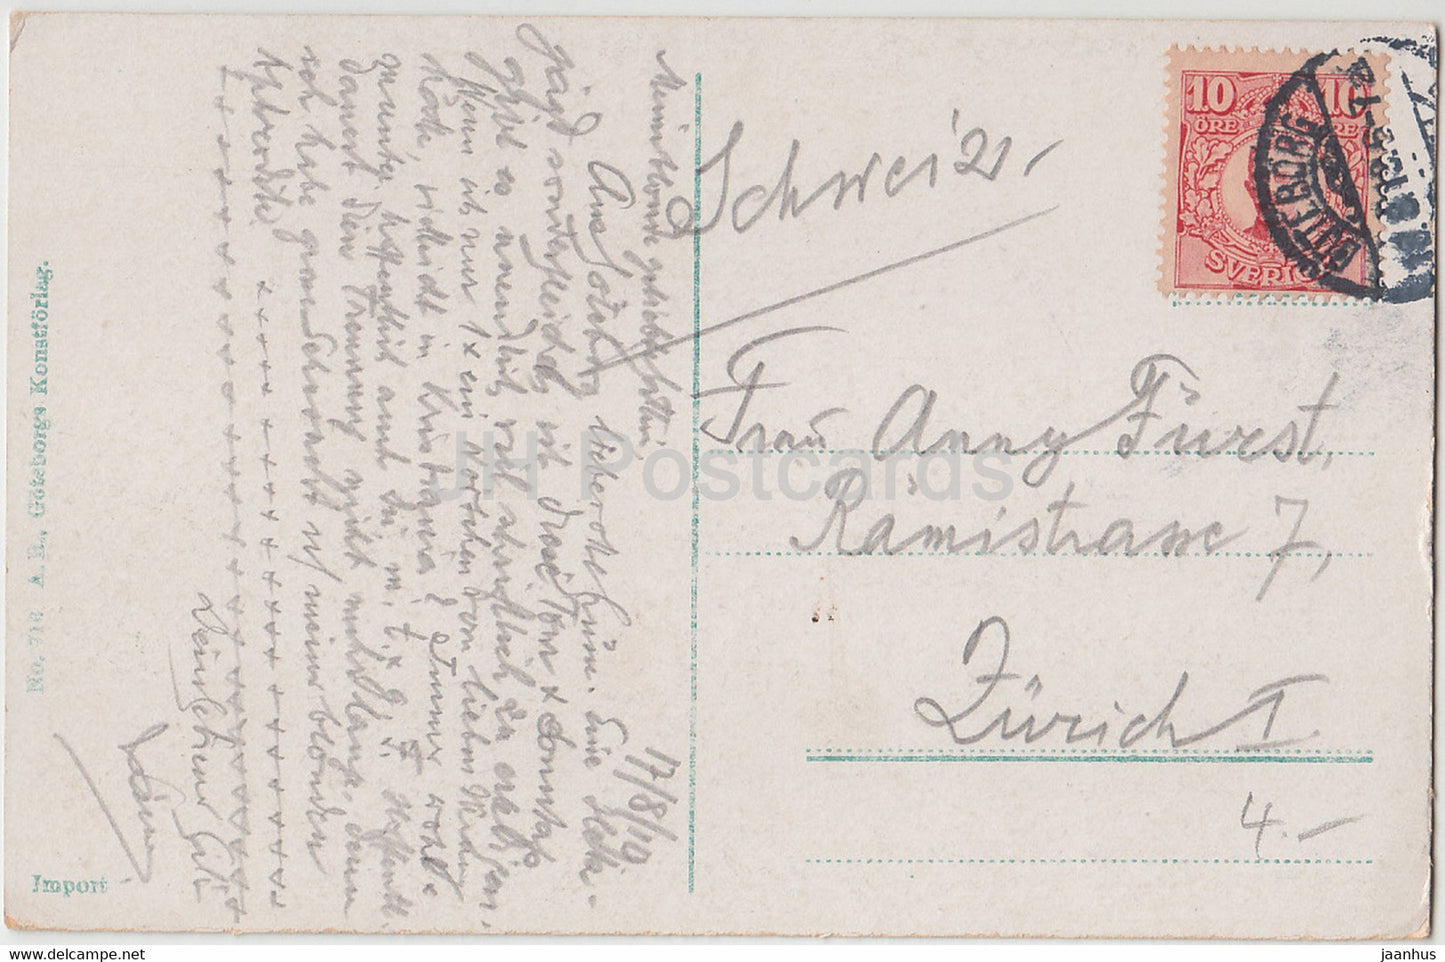 Trolleholm - Skane - old postcard - 1910 - Sweden - used